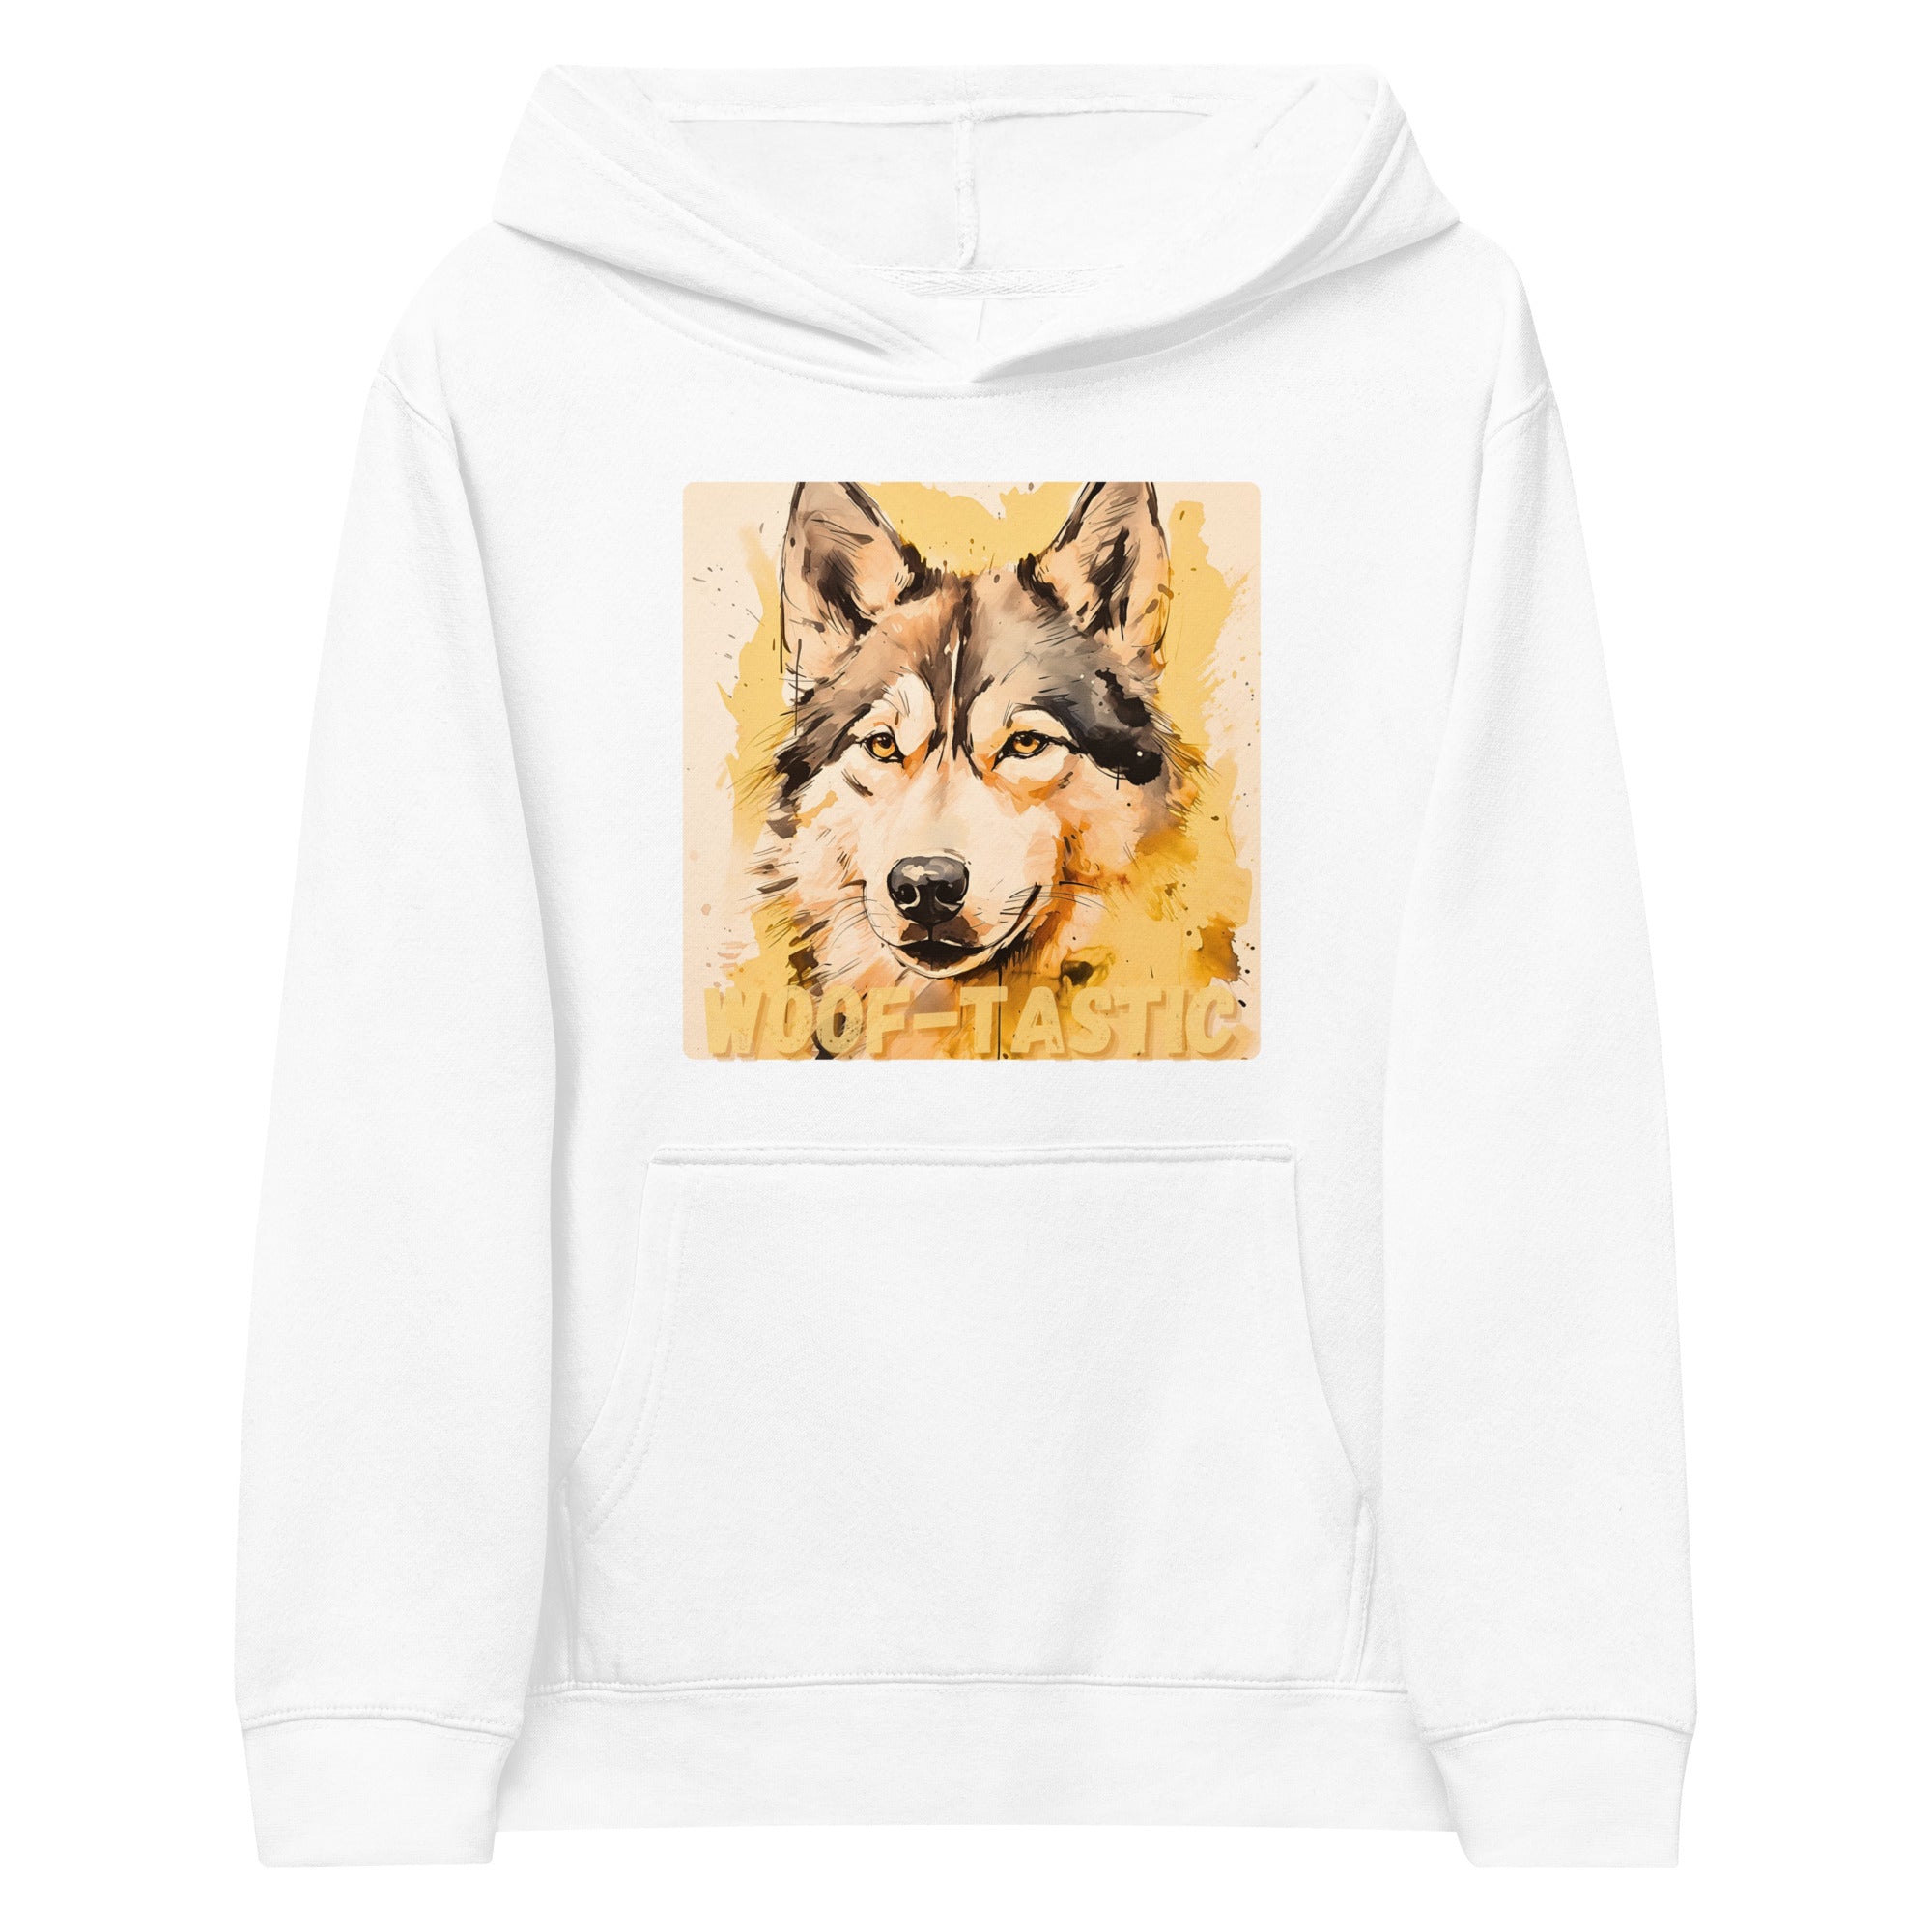 Kids fleece hoodie Woof-tastic Siberian Husky